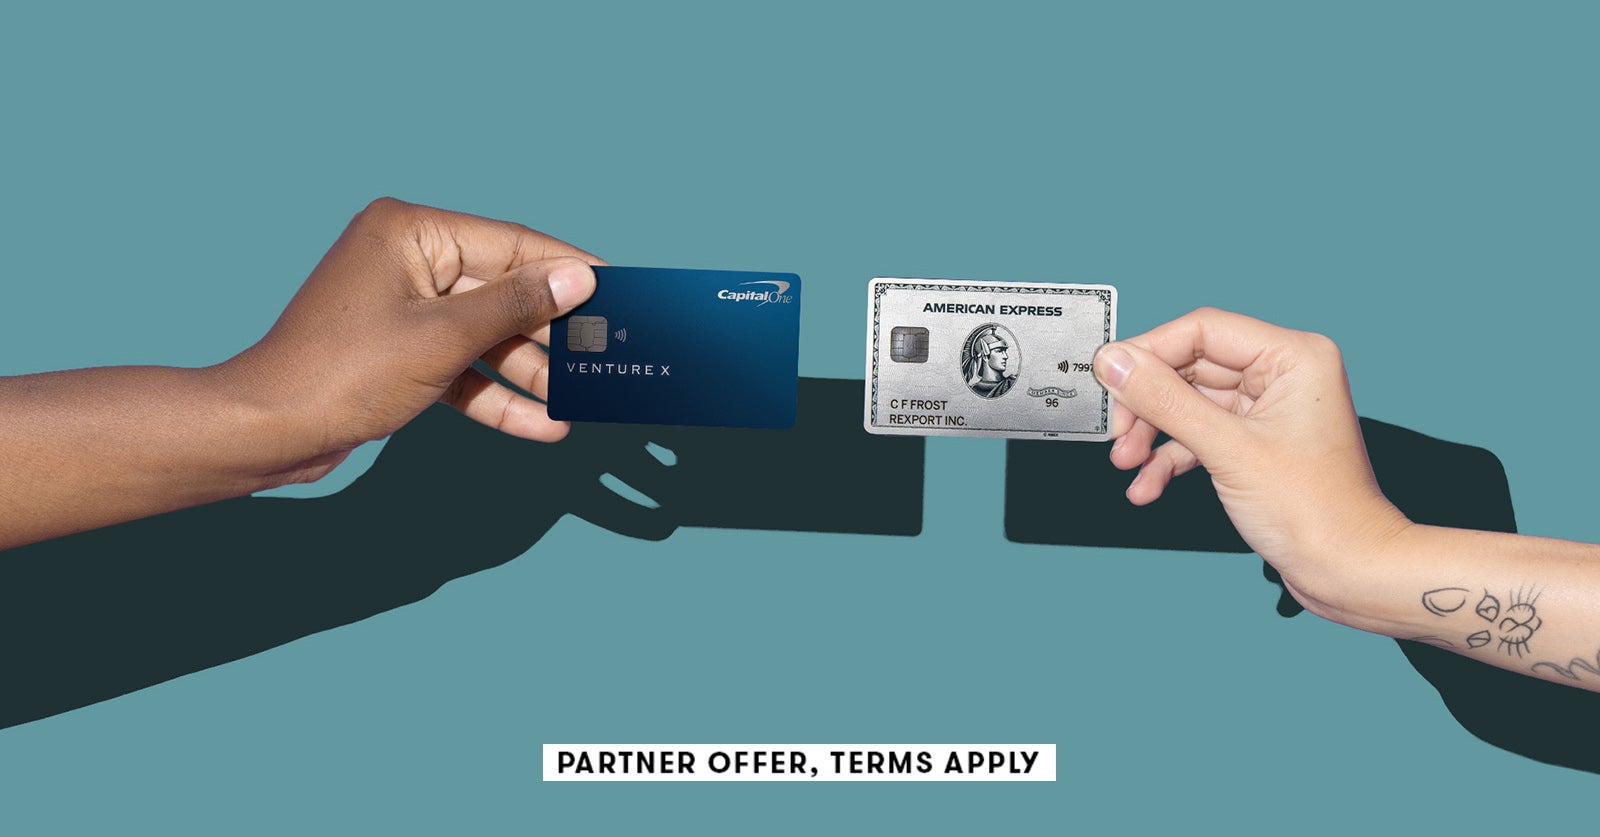 Amex Platinum Vs Capital One Venture X: Card Comparison 2023